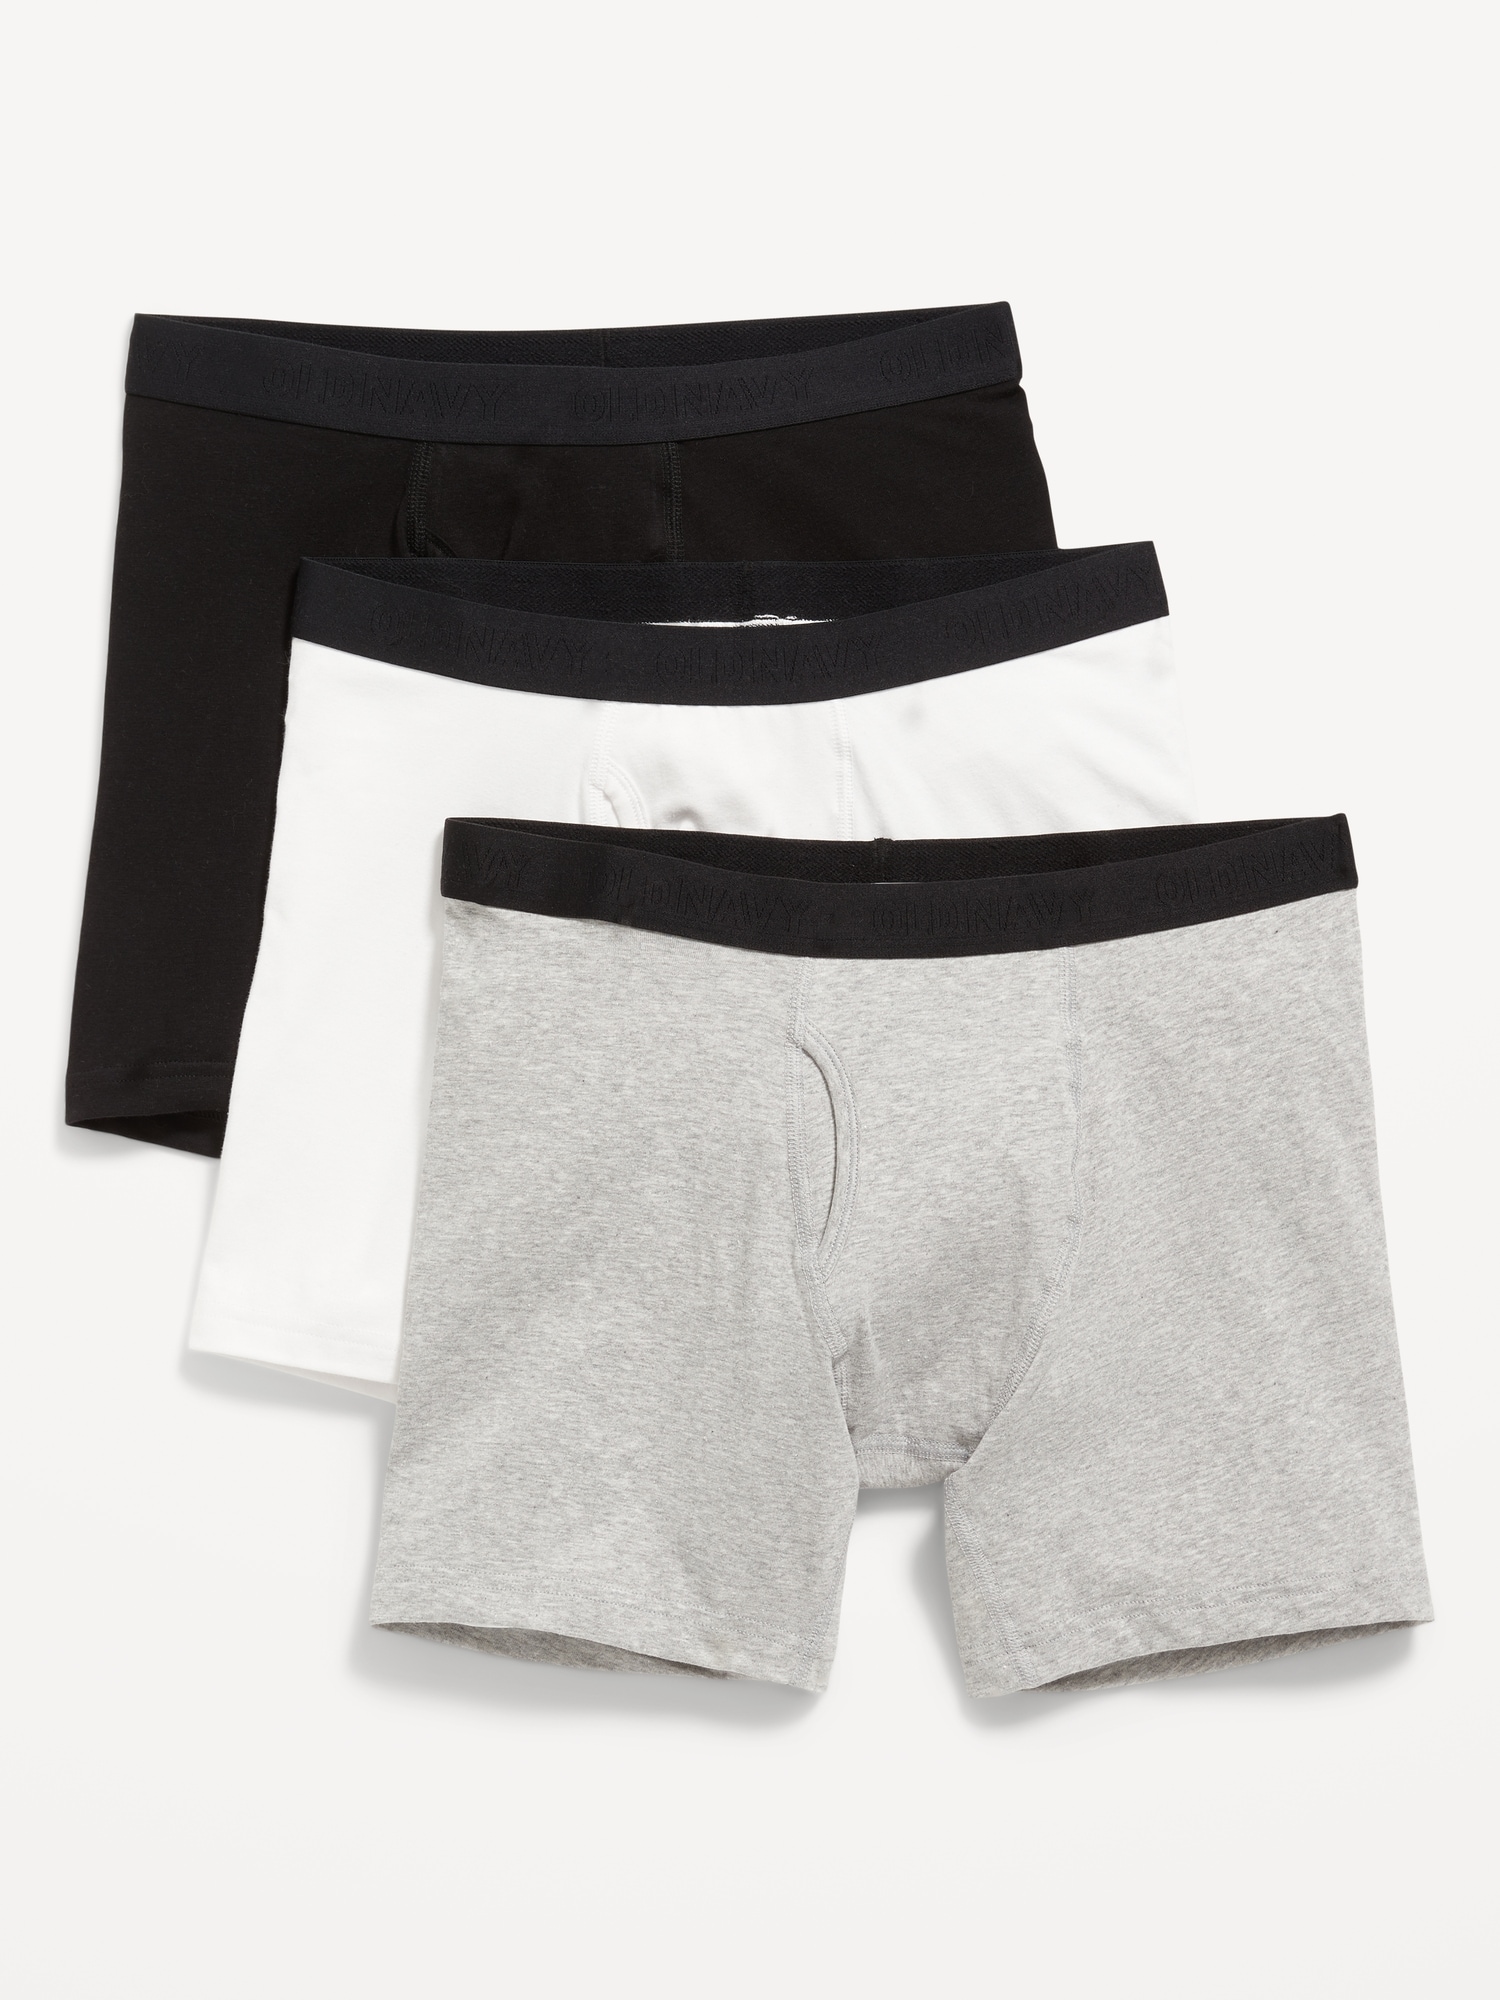 Soft men underwear elastic waistband For Comfort 